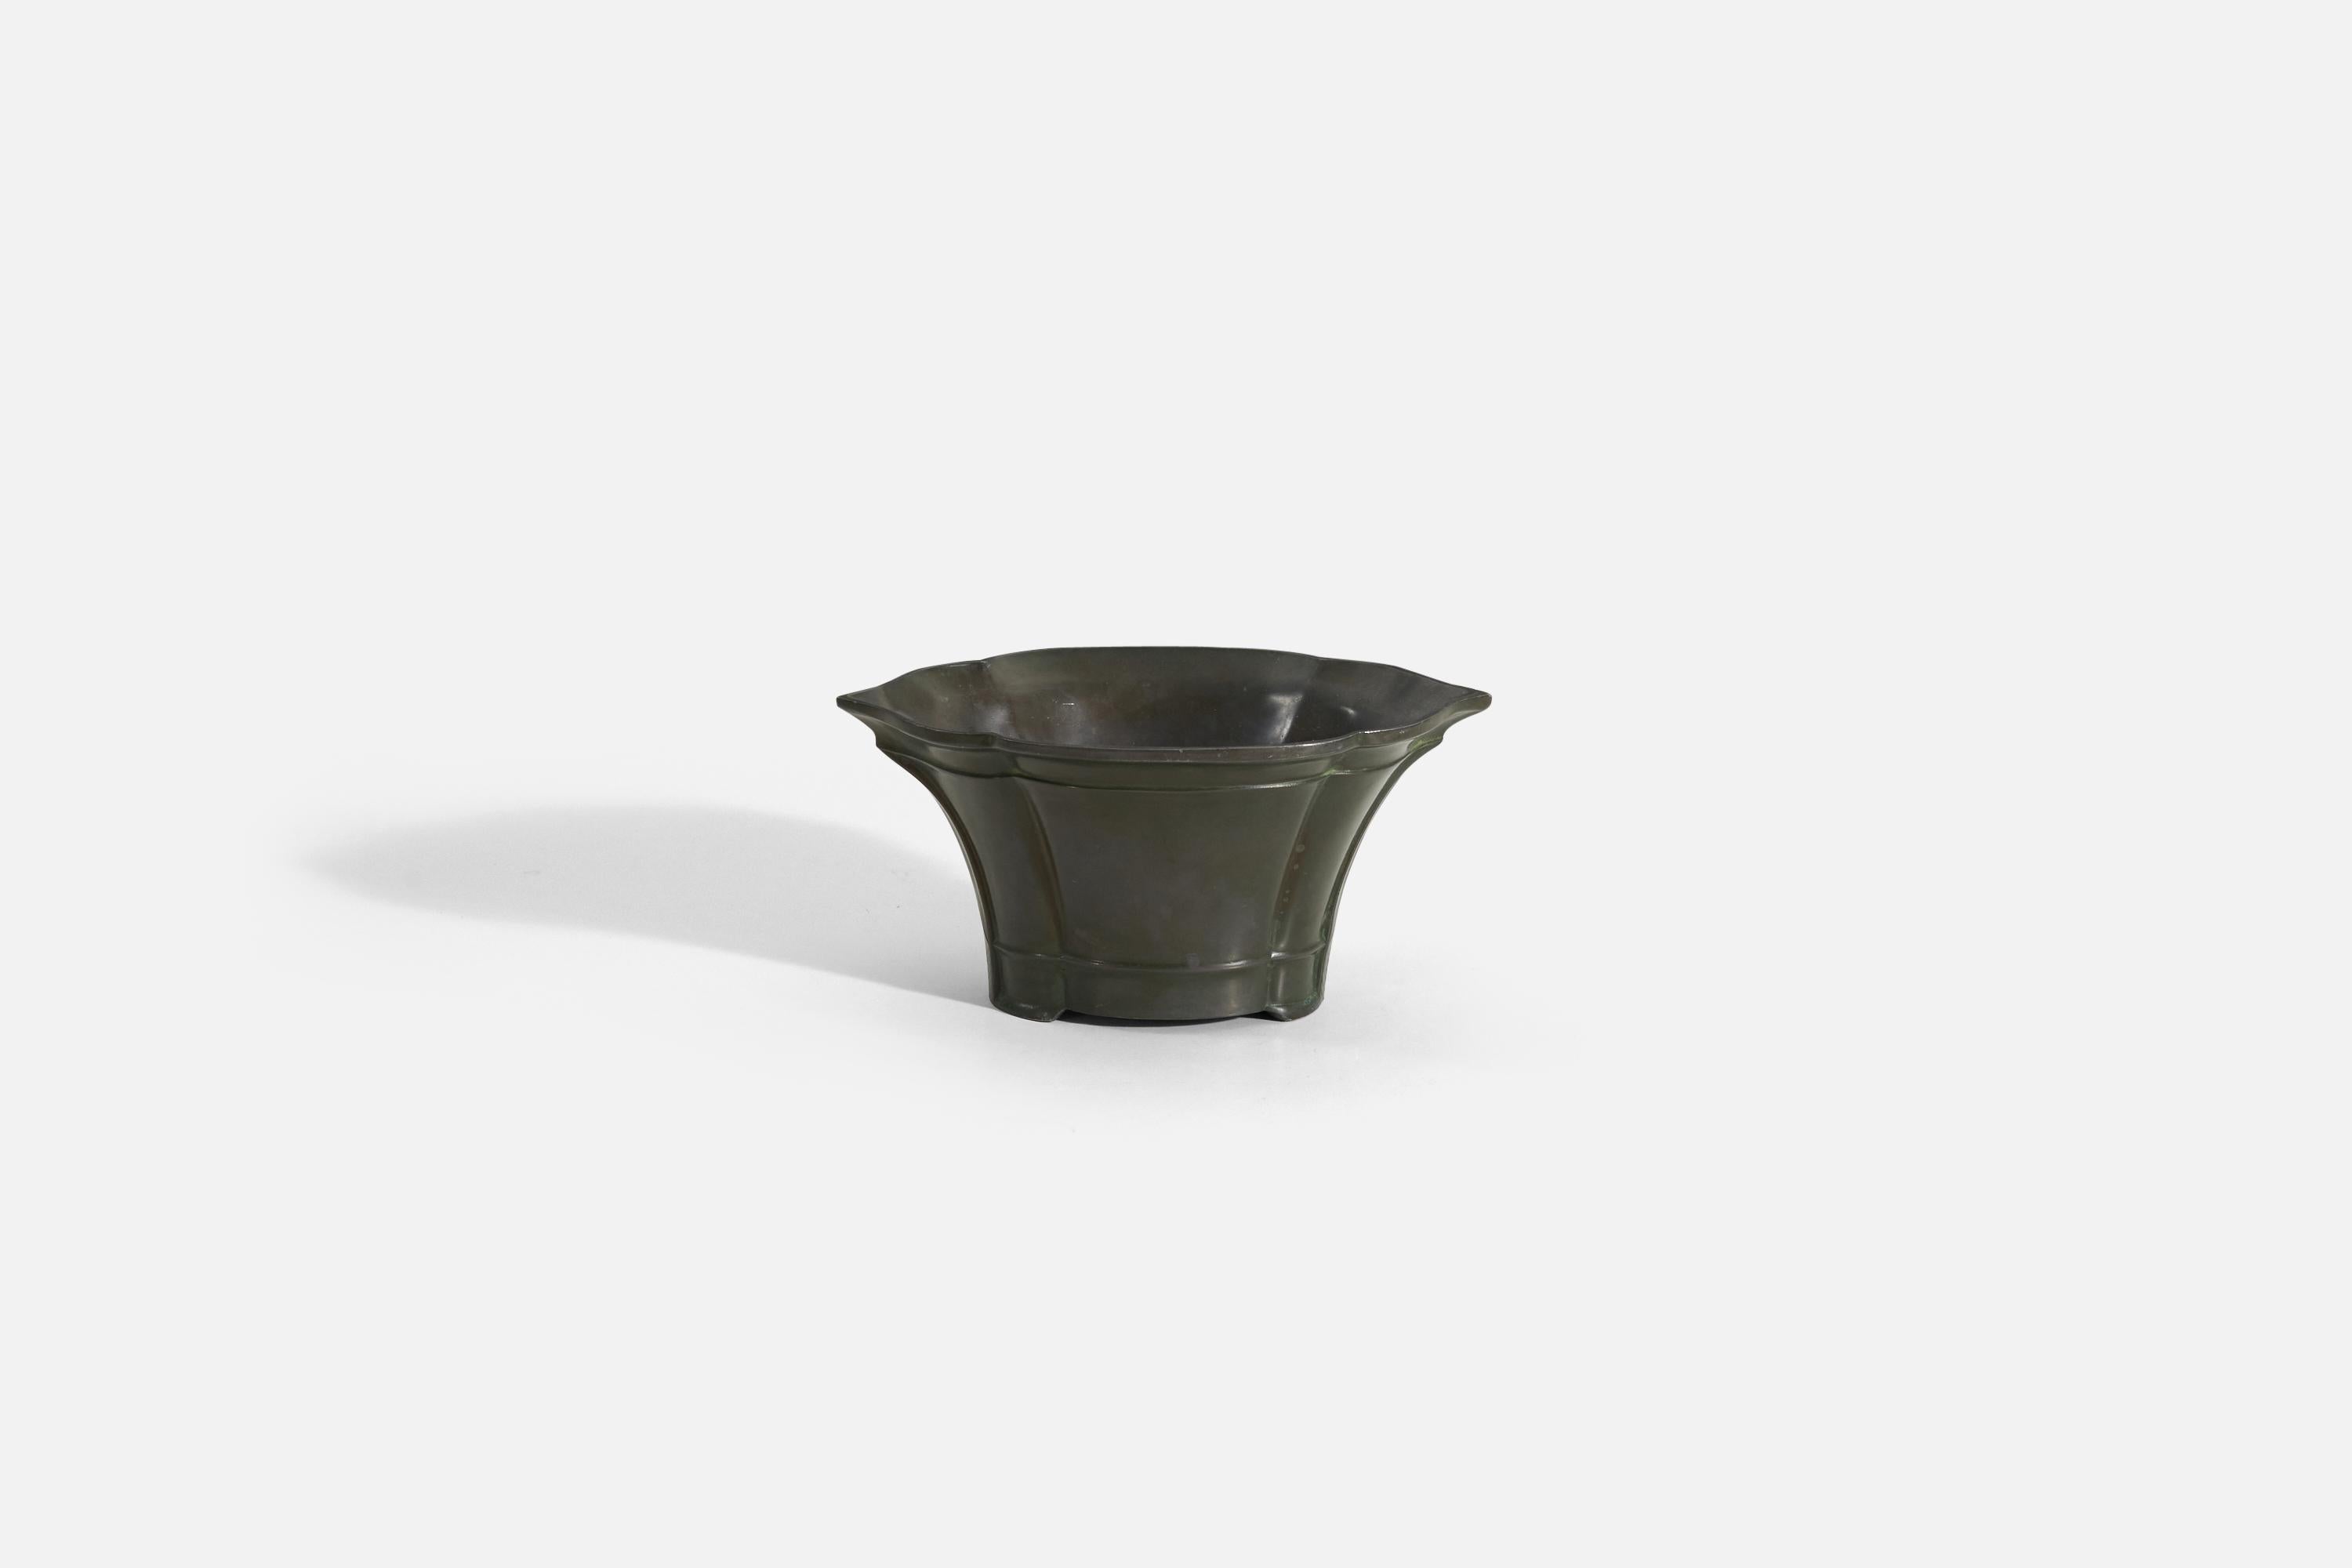 An alloy Disko Metal low vase / bowl by Just Andersen, Denmark. Base marked 